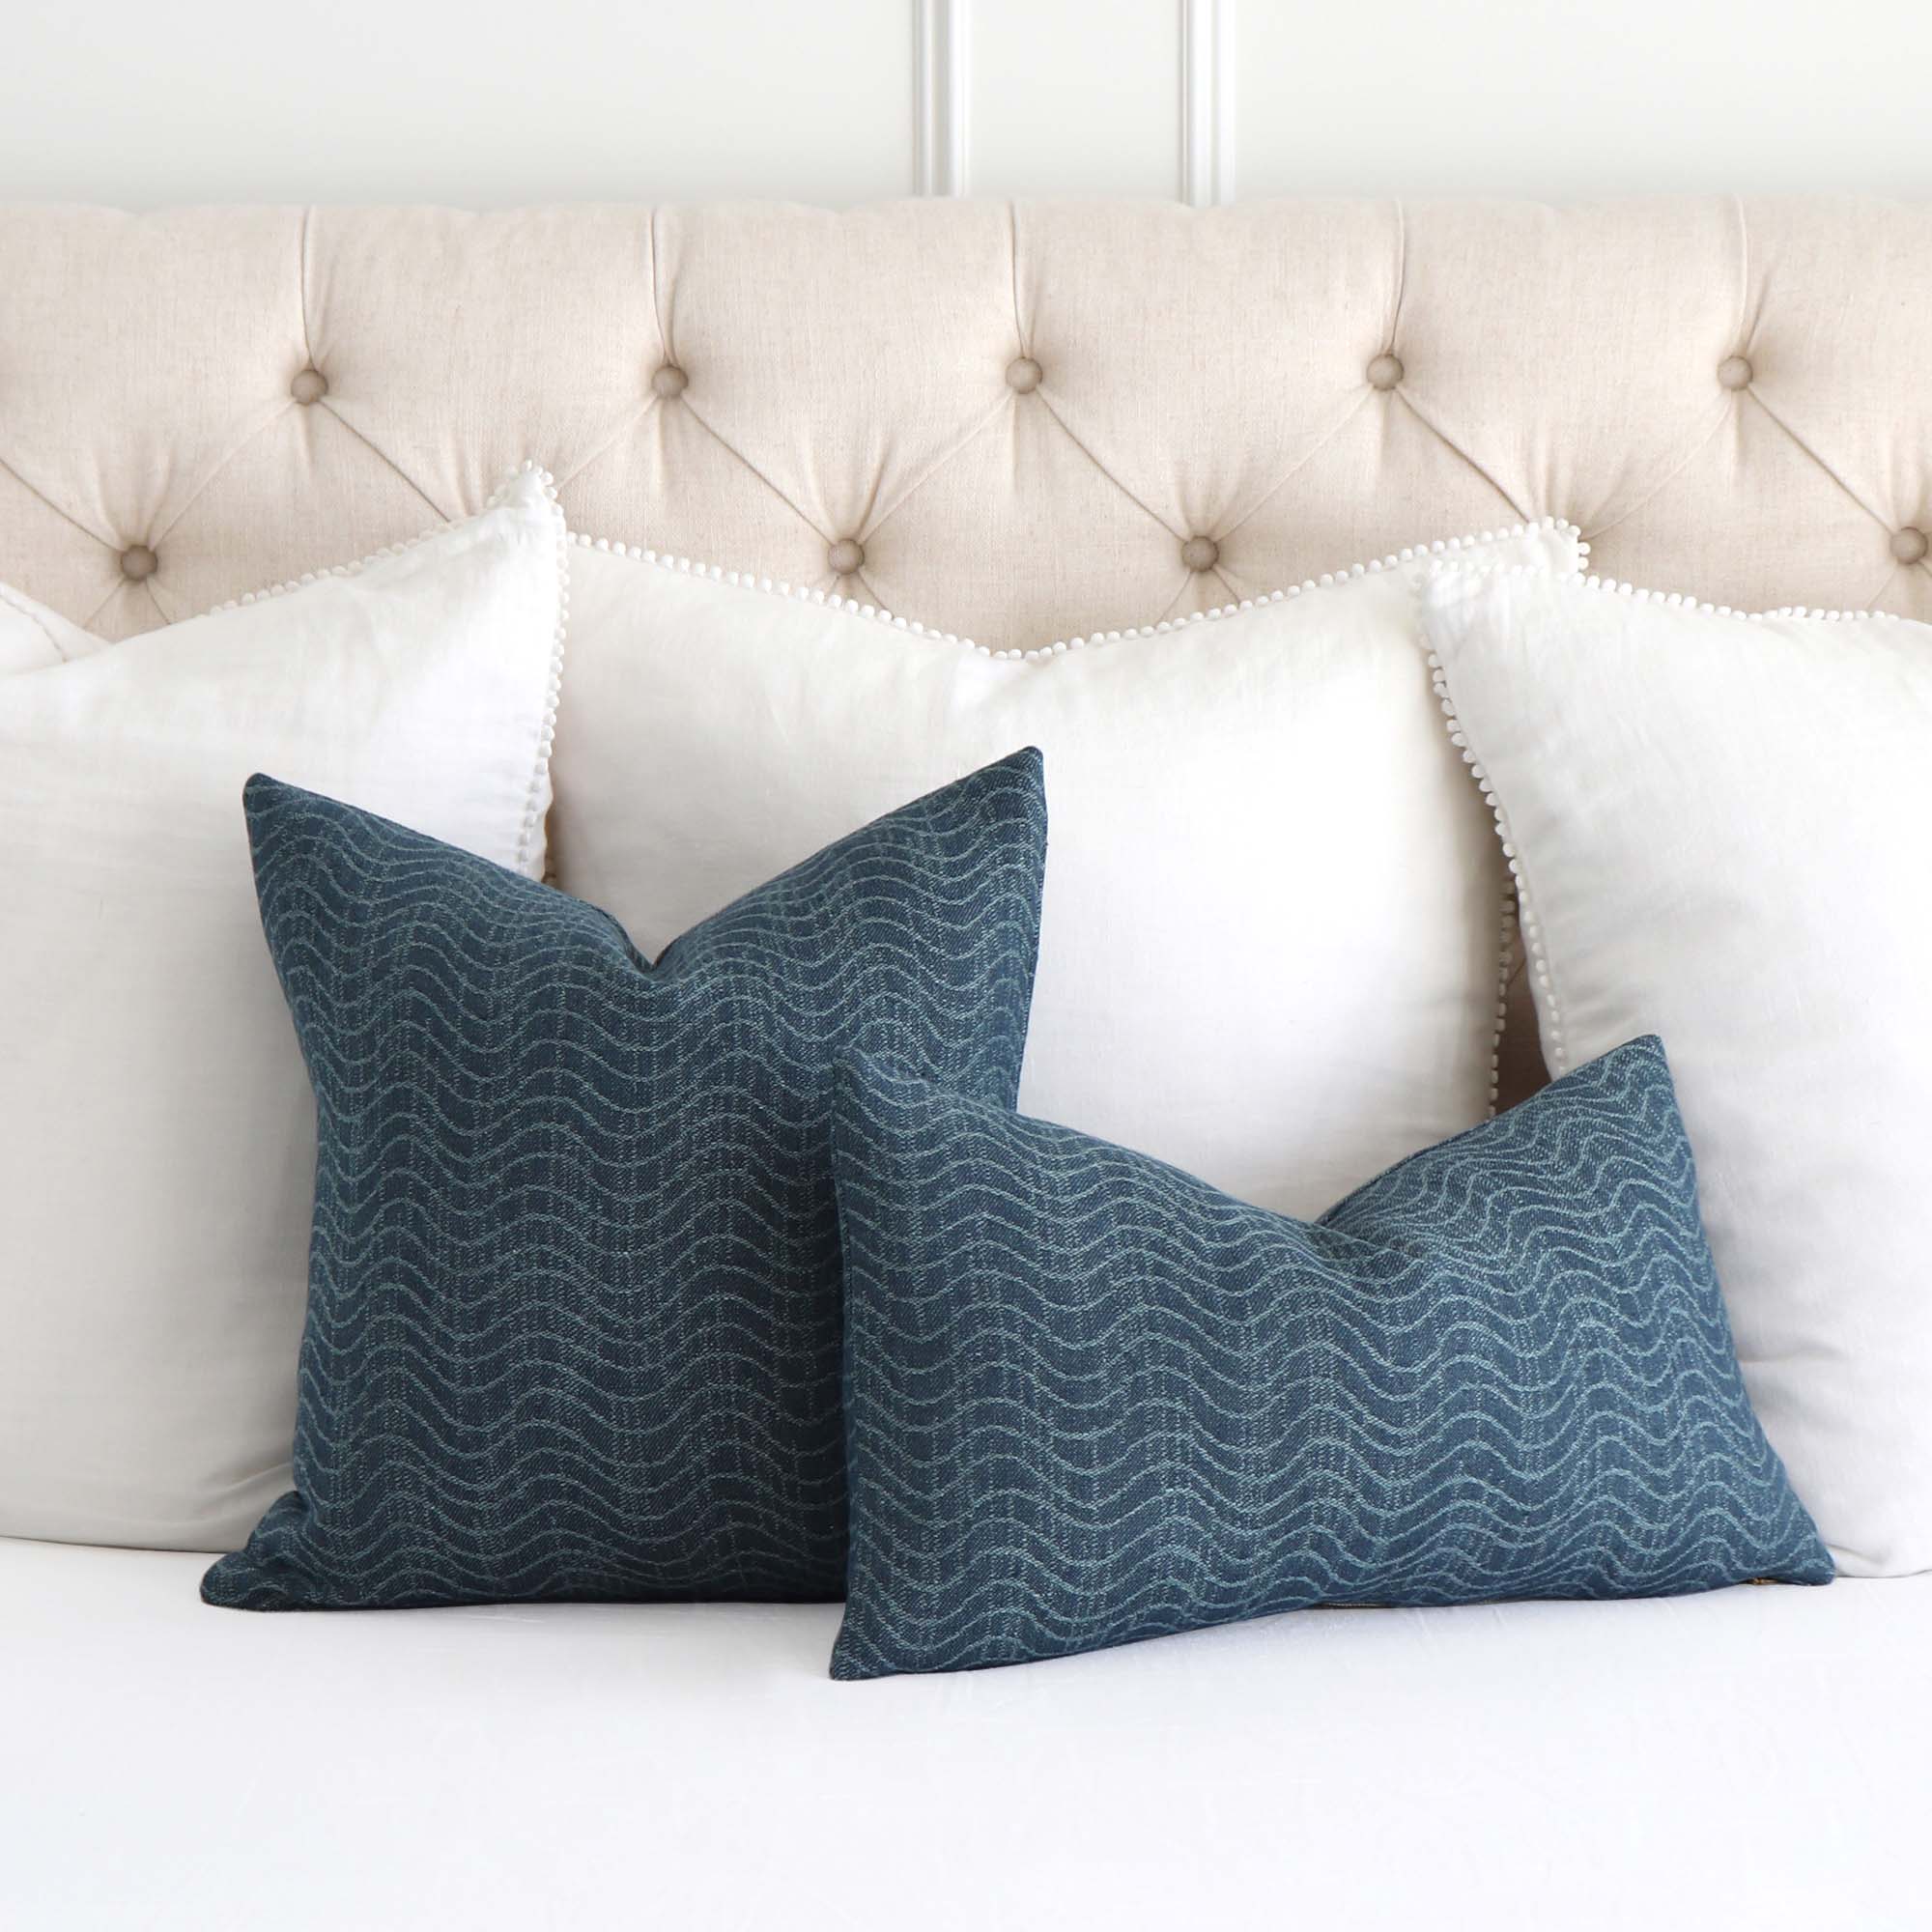 Kelly Wearstler LeeJofa Dadami Marlin Cobalt Denim Blue Woven Linen Striped Designer Throw Pillow Cover on Bed